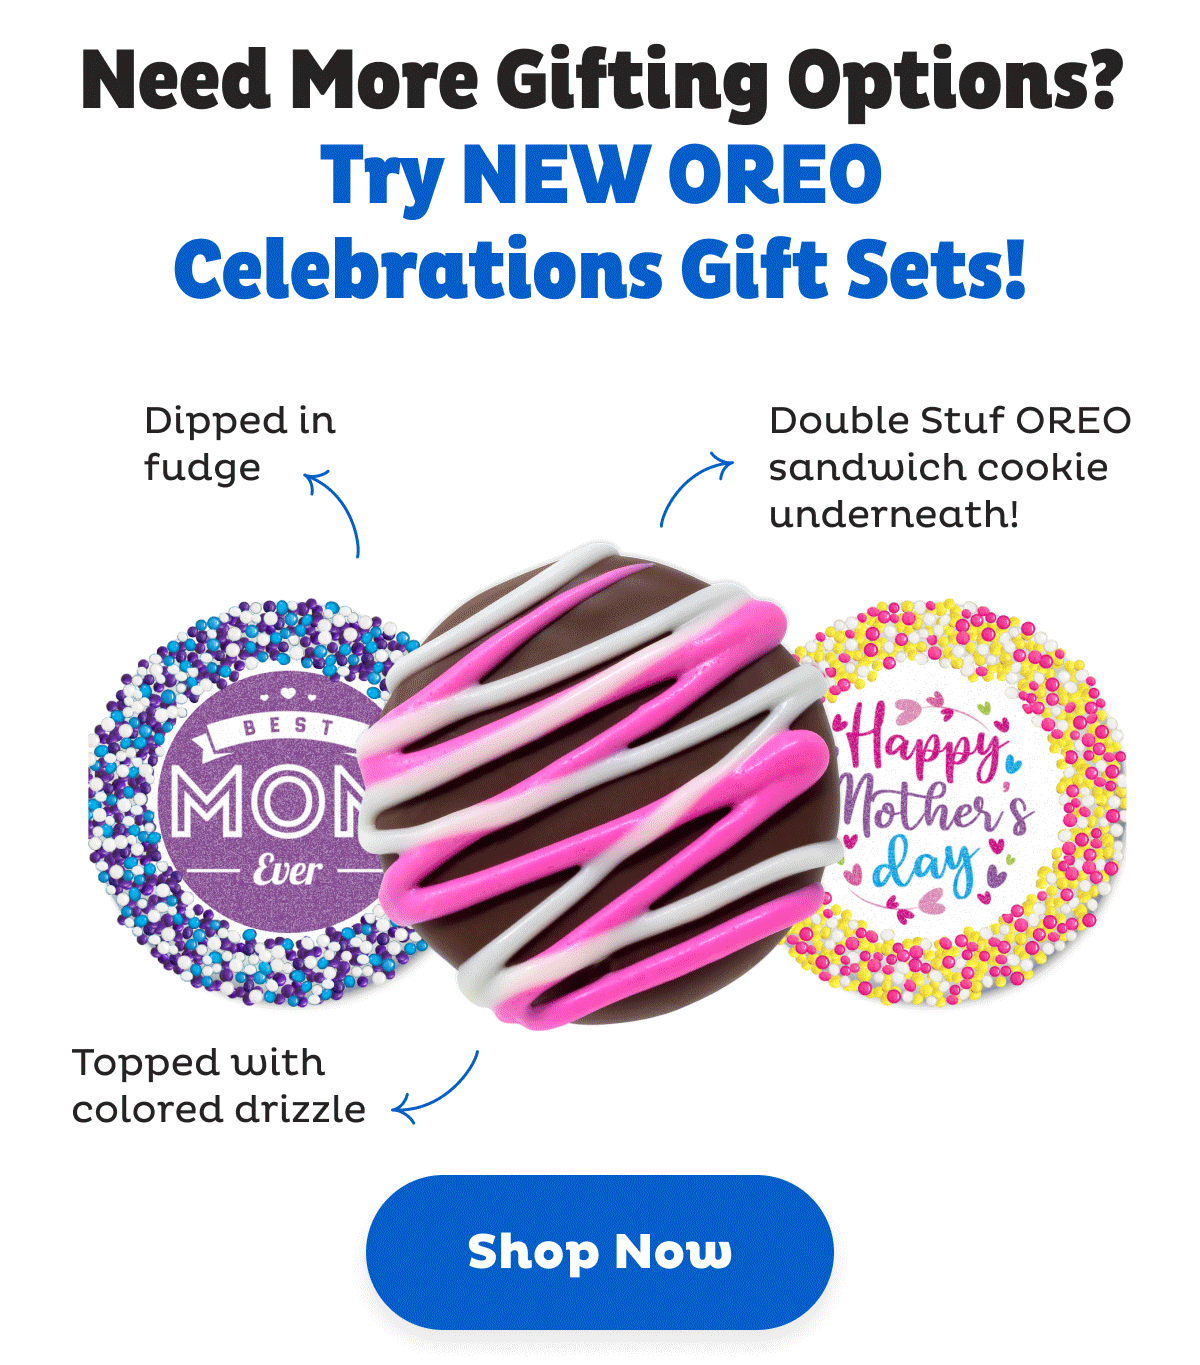 Try NEW OREO Celebrations Gift Sets